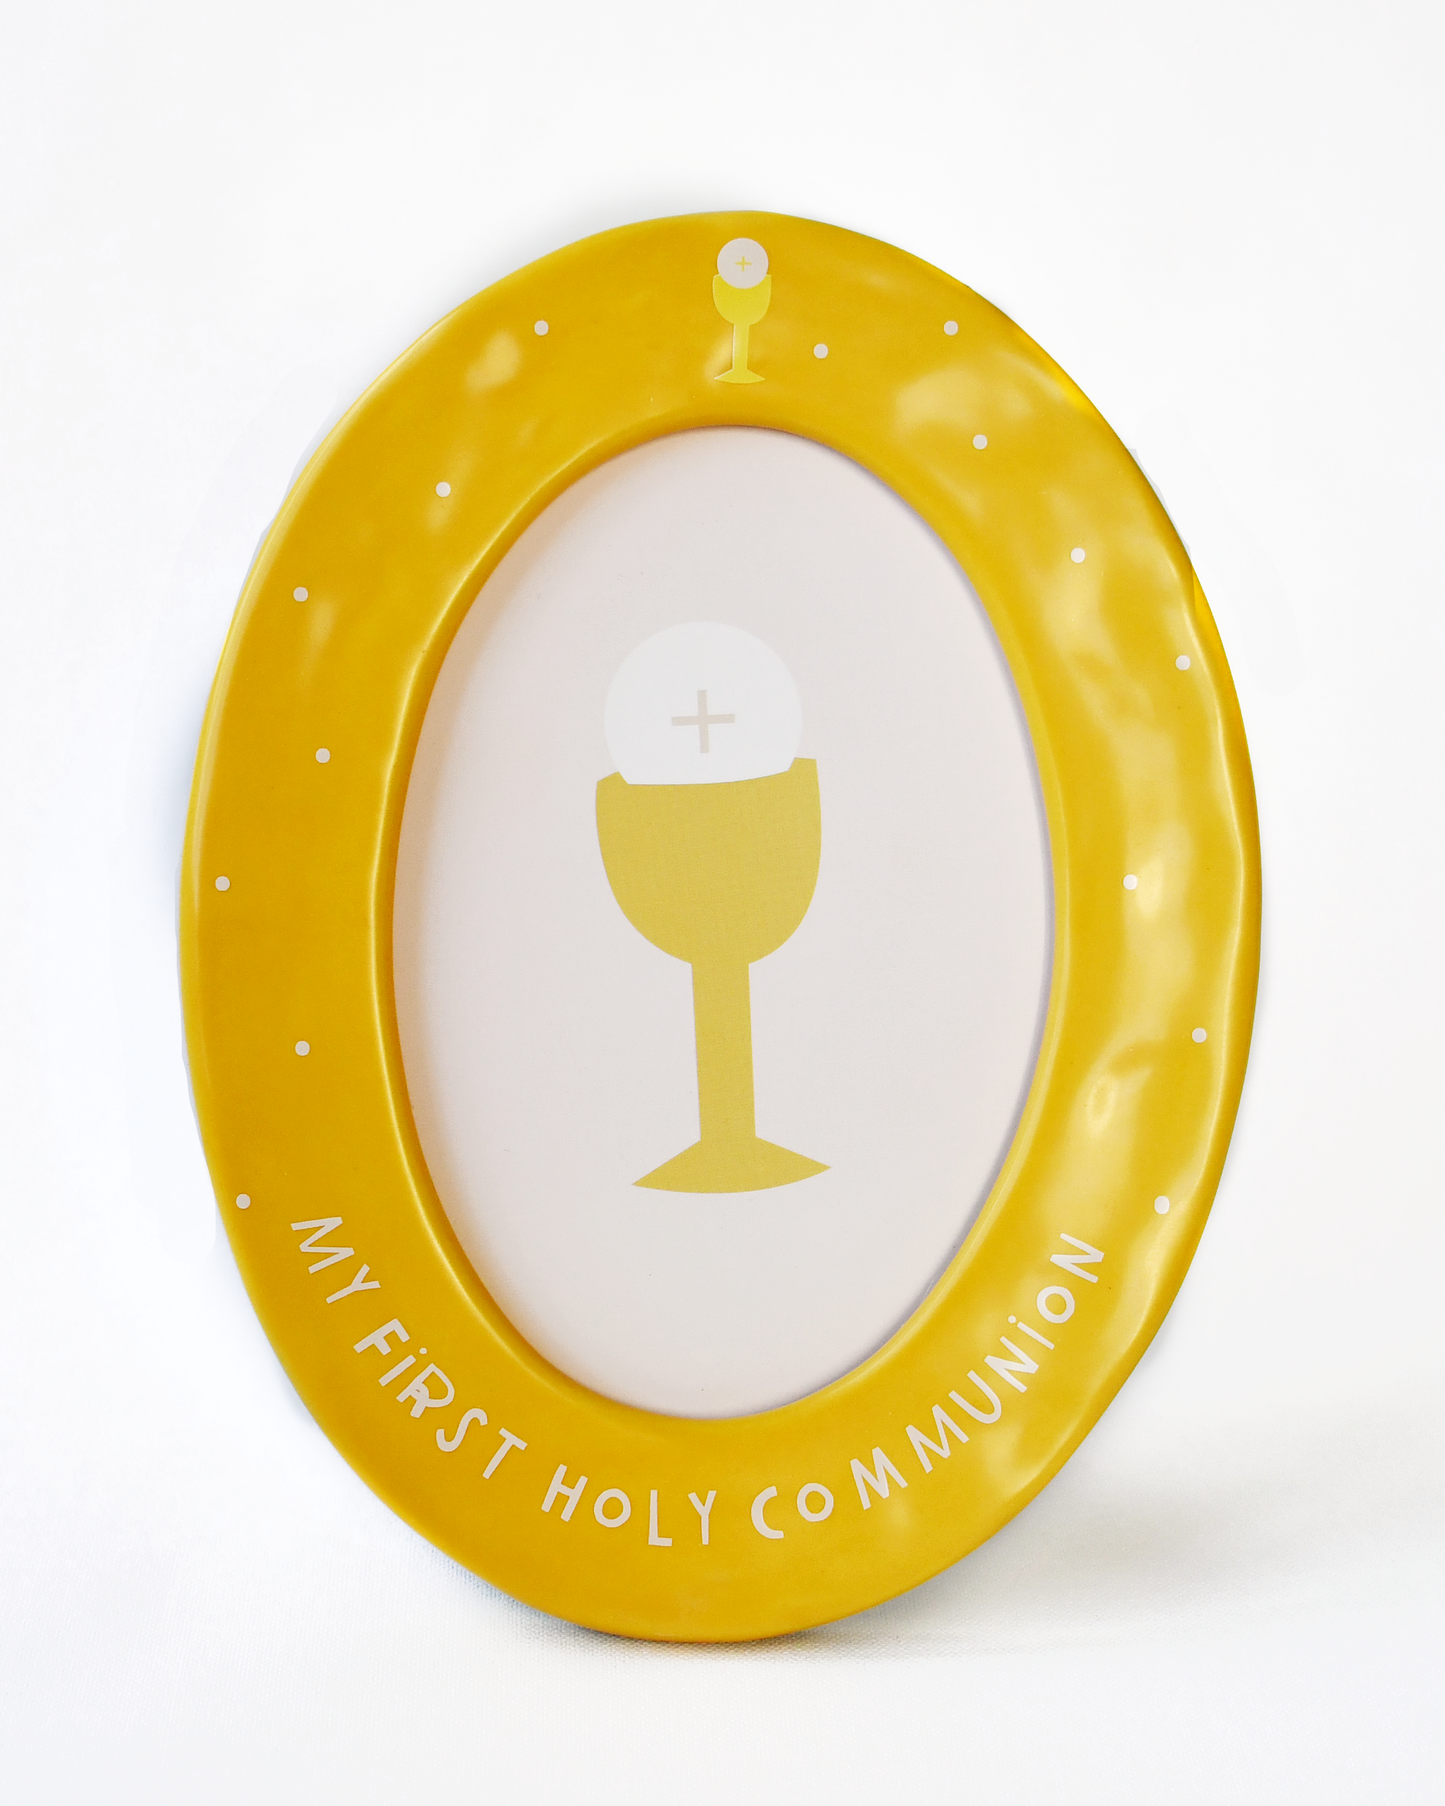 Ceramic Picture Frames: Holy Spirit